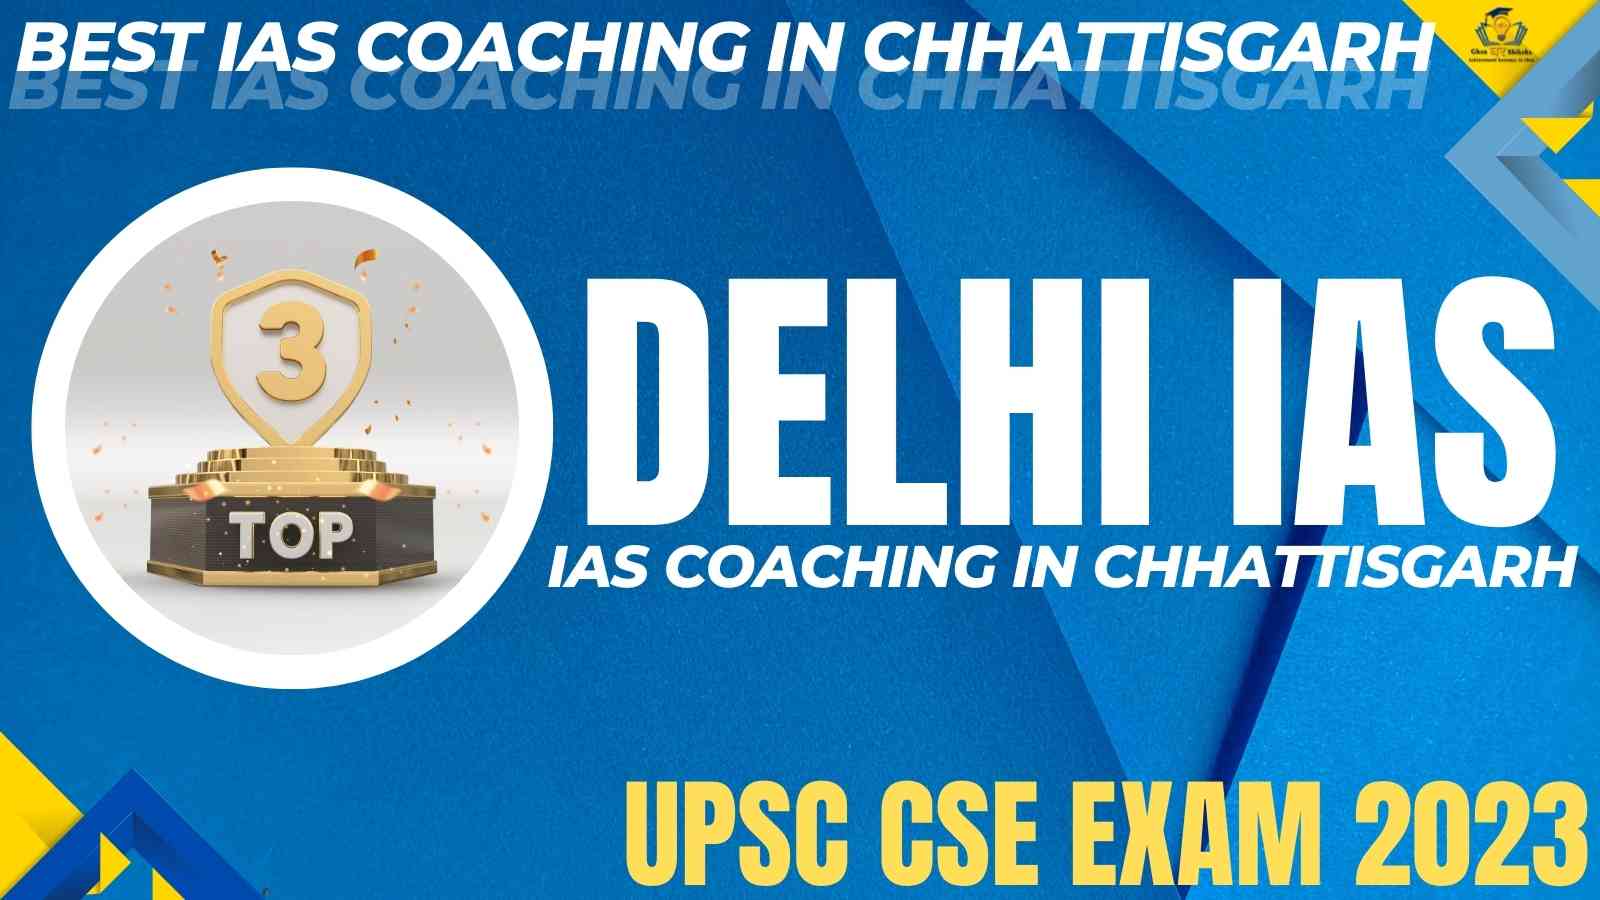 Best IAS Coaching of Chhattisgarh